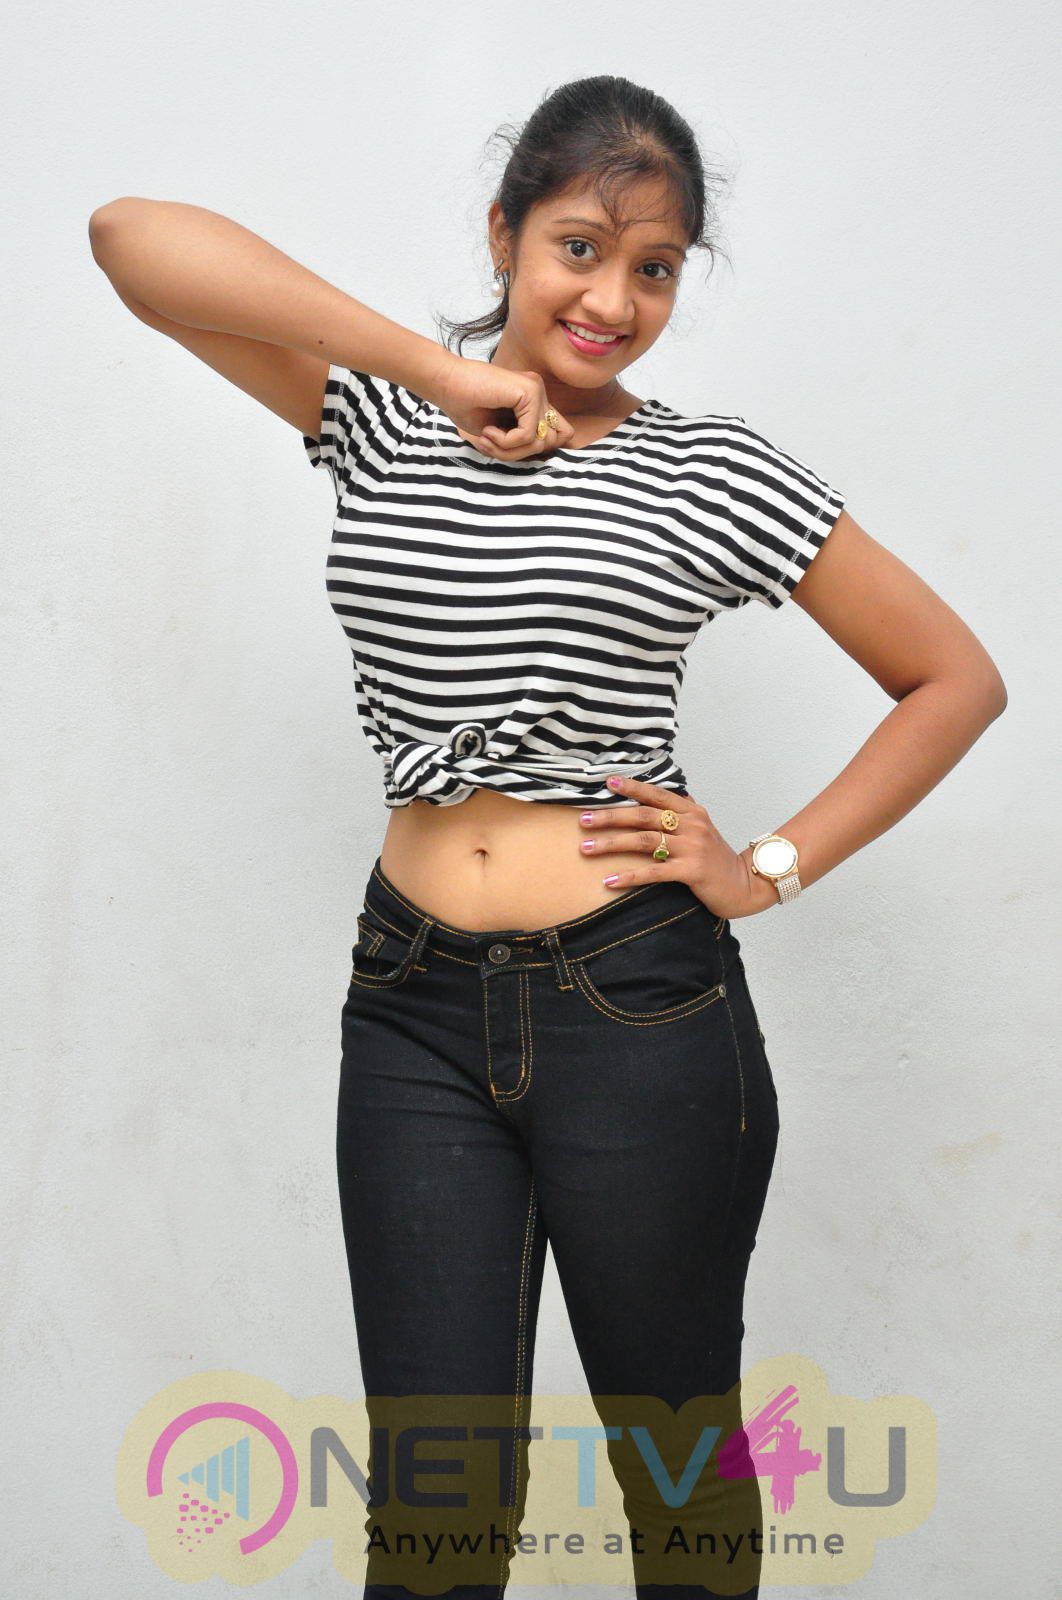 Latest Photos Of Actress Sandeepthi At Affair Trailer Launch | 63364 |  Movie Press Meet Pics | Latest Event Images & Stills